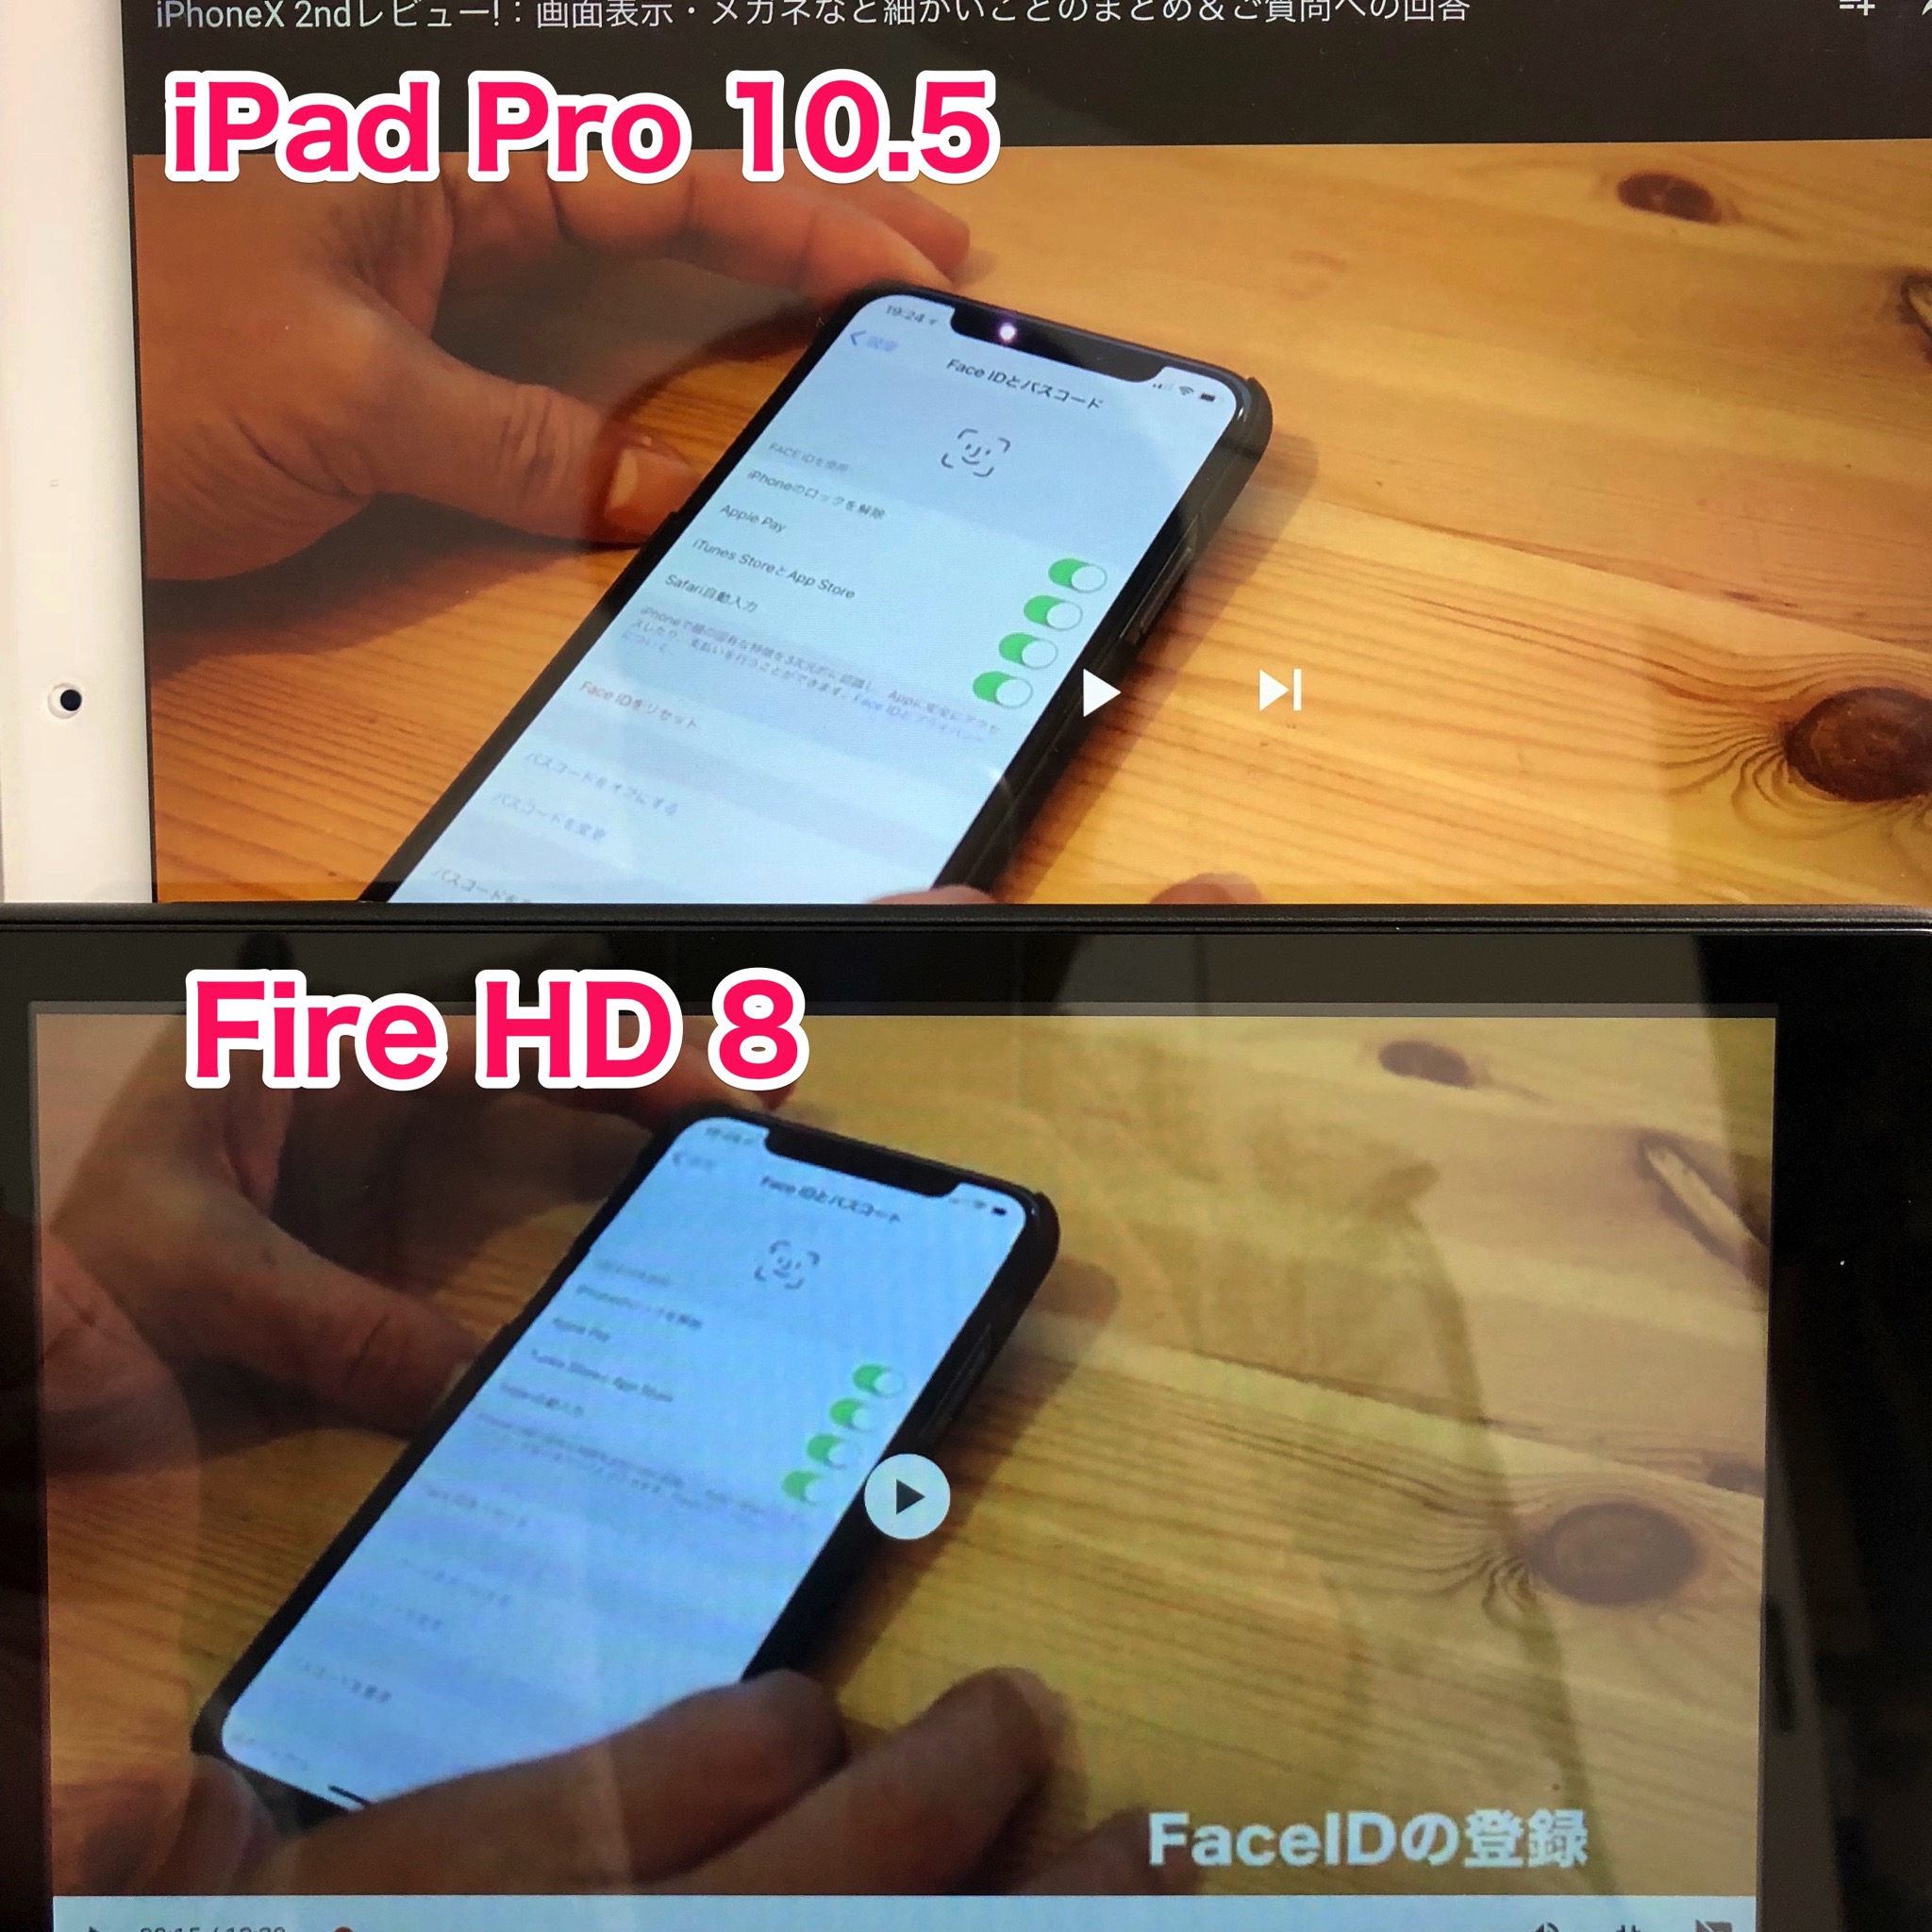 Fire HDとiPadの映像を比較